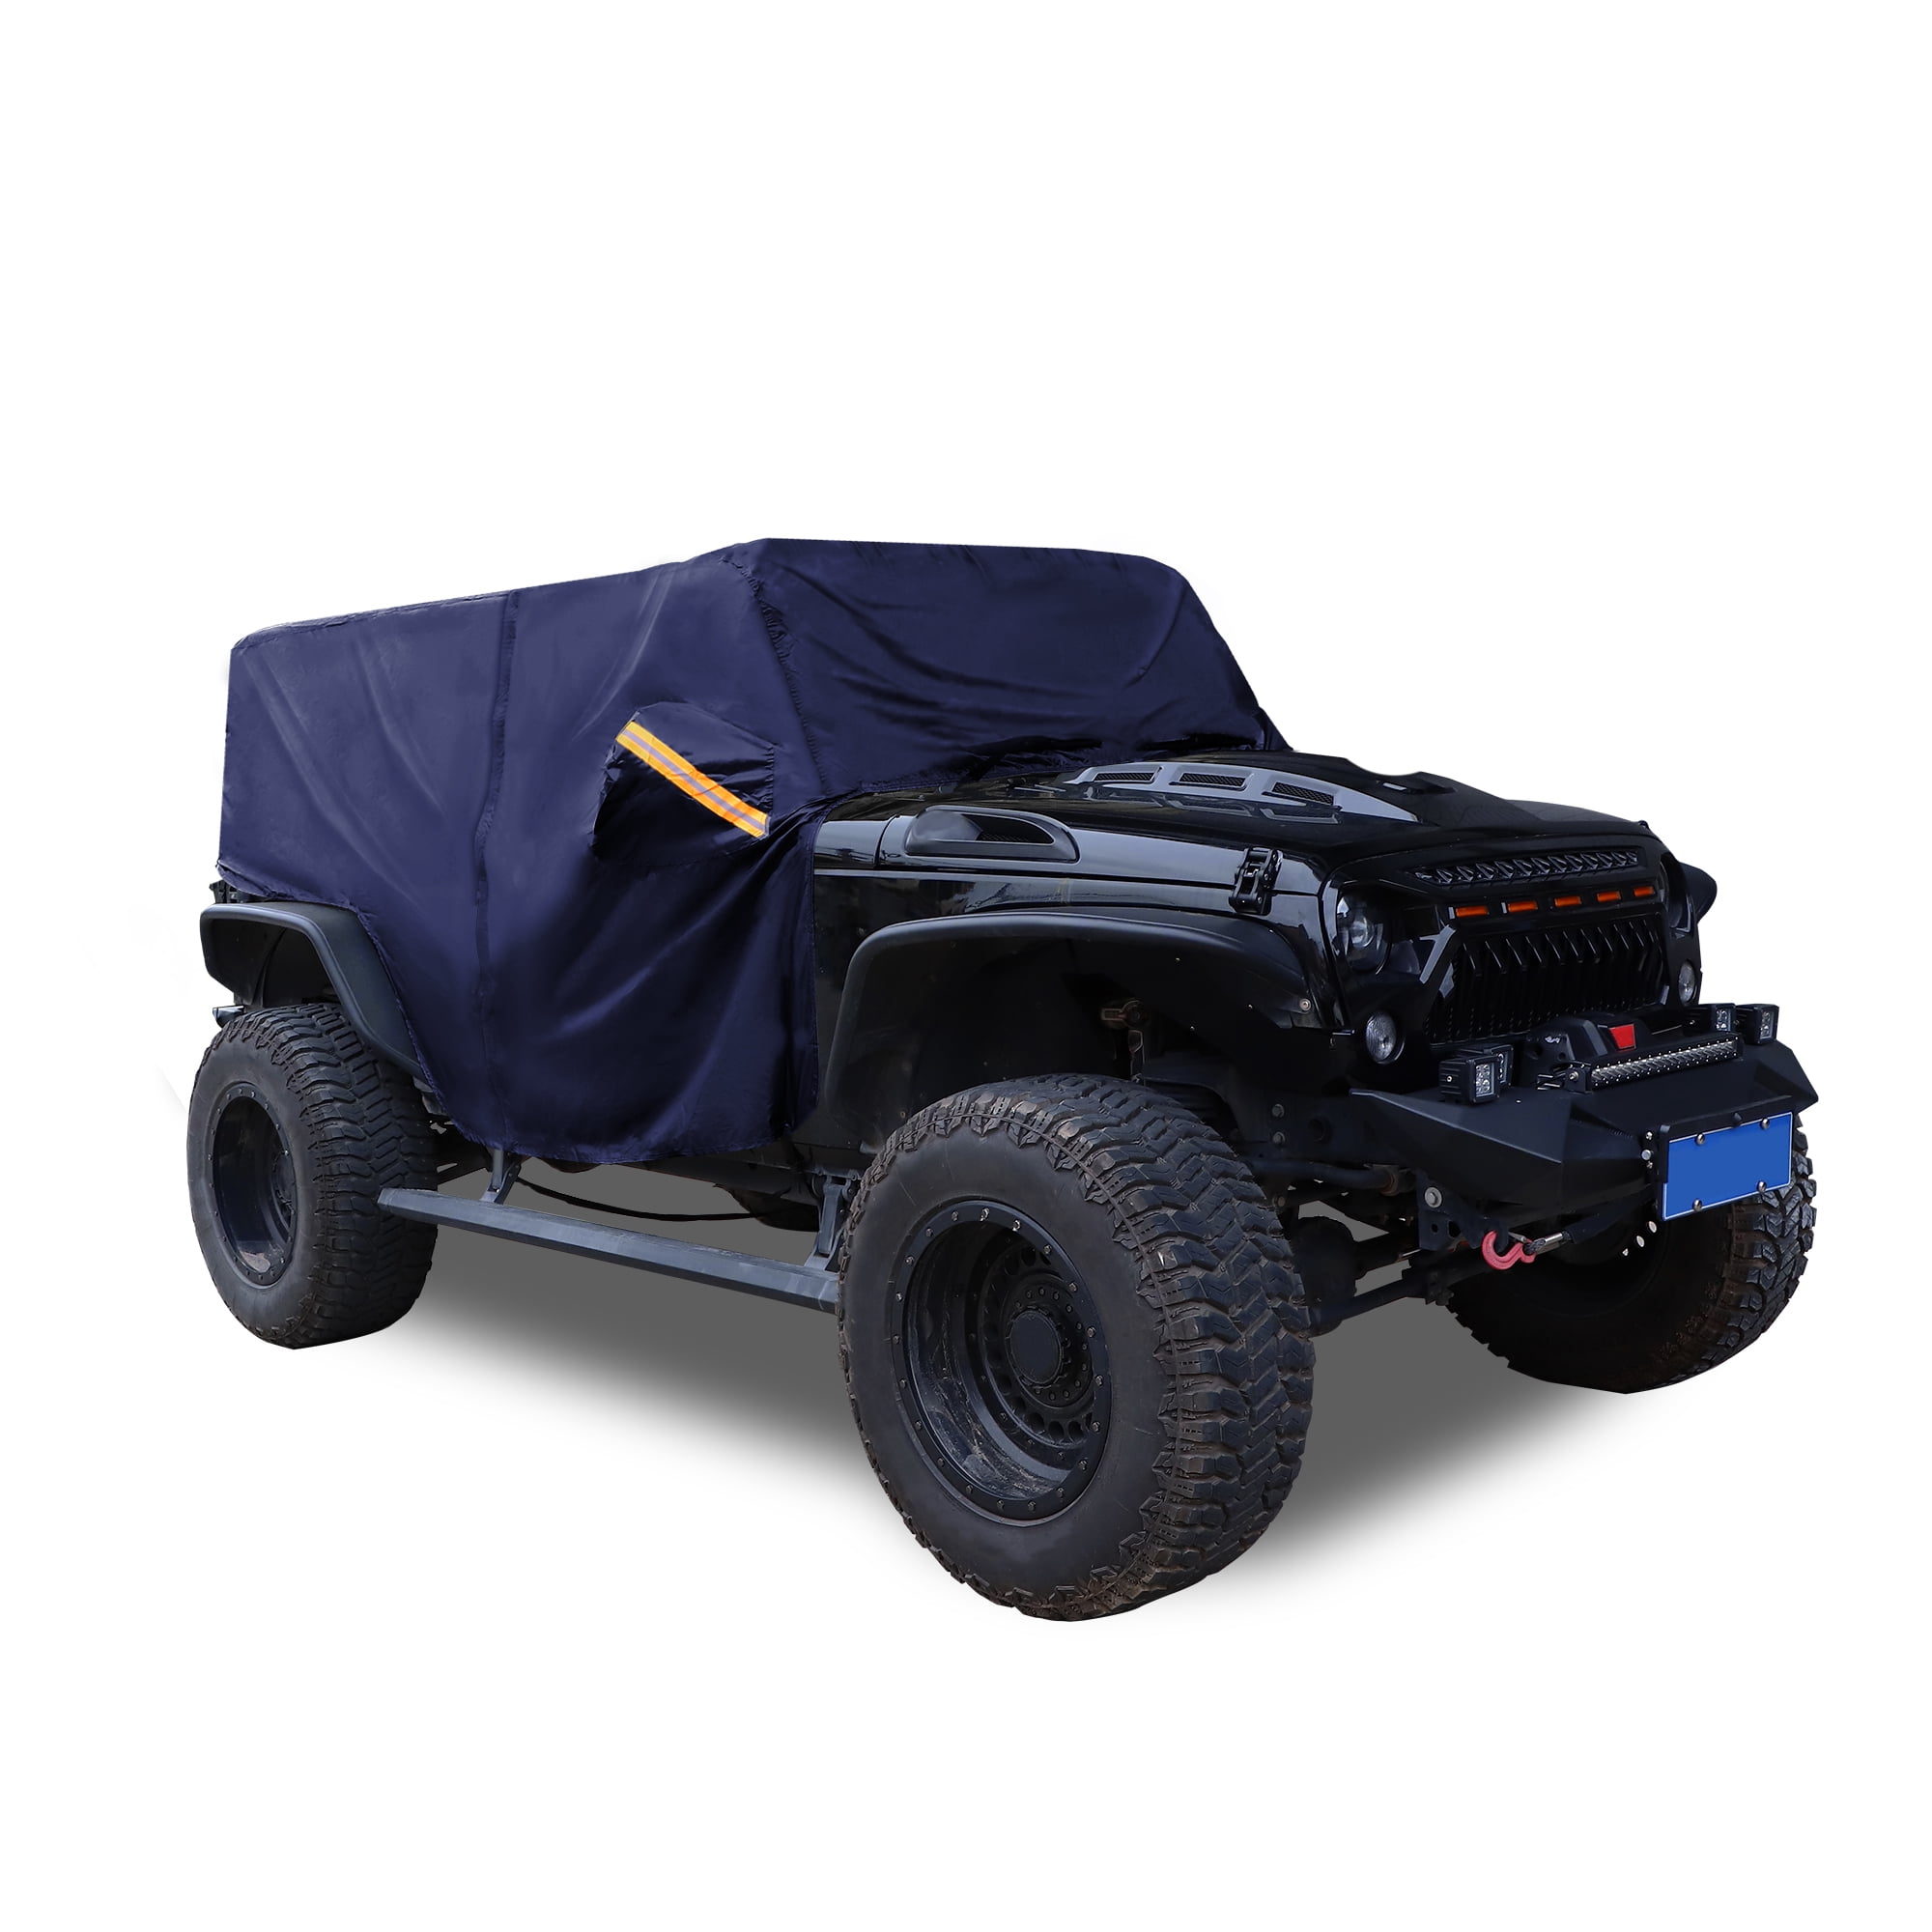 Unique Bargains Cab Car Cover for Jeep Wrangler JK JL Hardtop 4 Door 07-21  Sun Protection 210D Oxford Zipper Navy Blue 